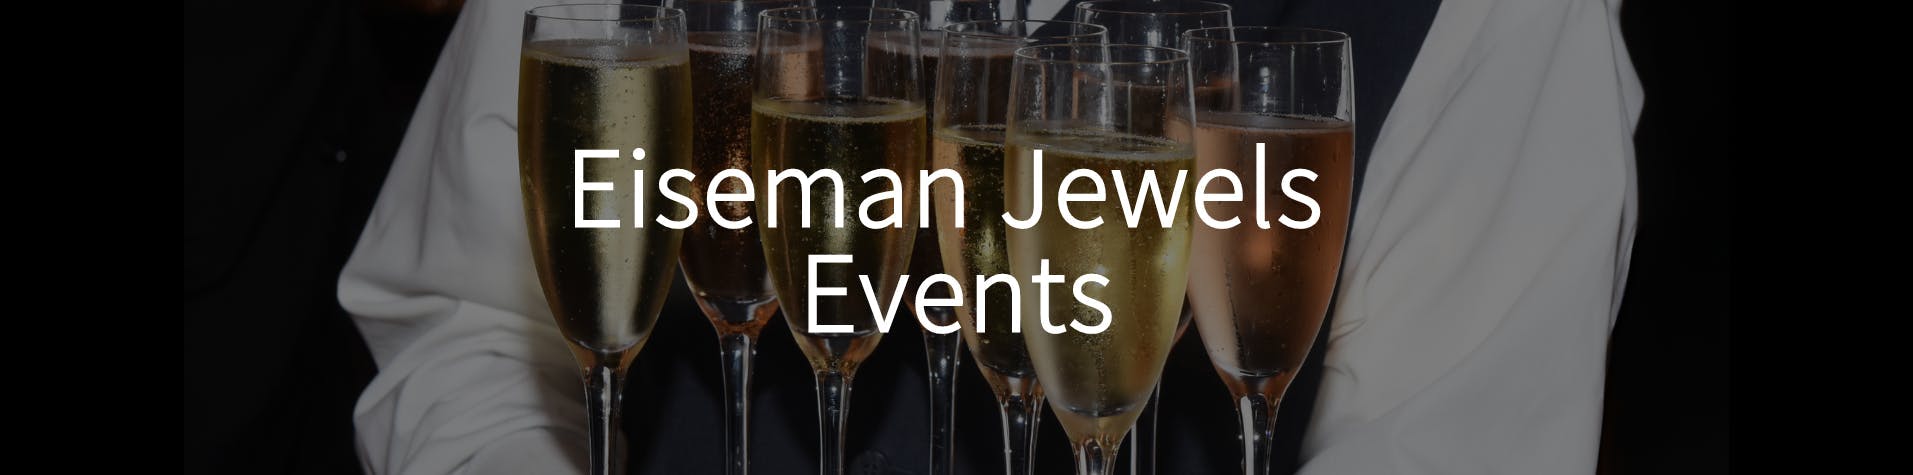 Eiseman Jewels events